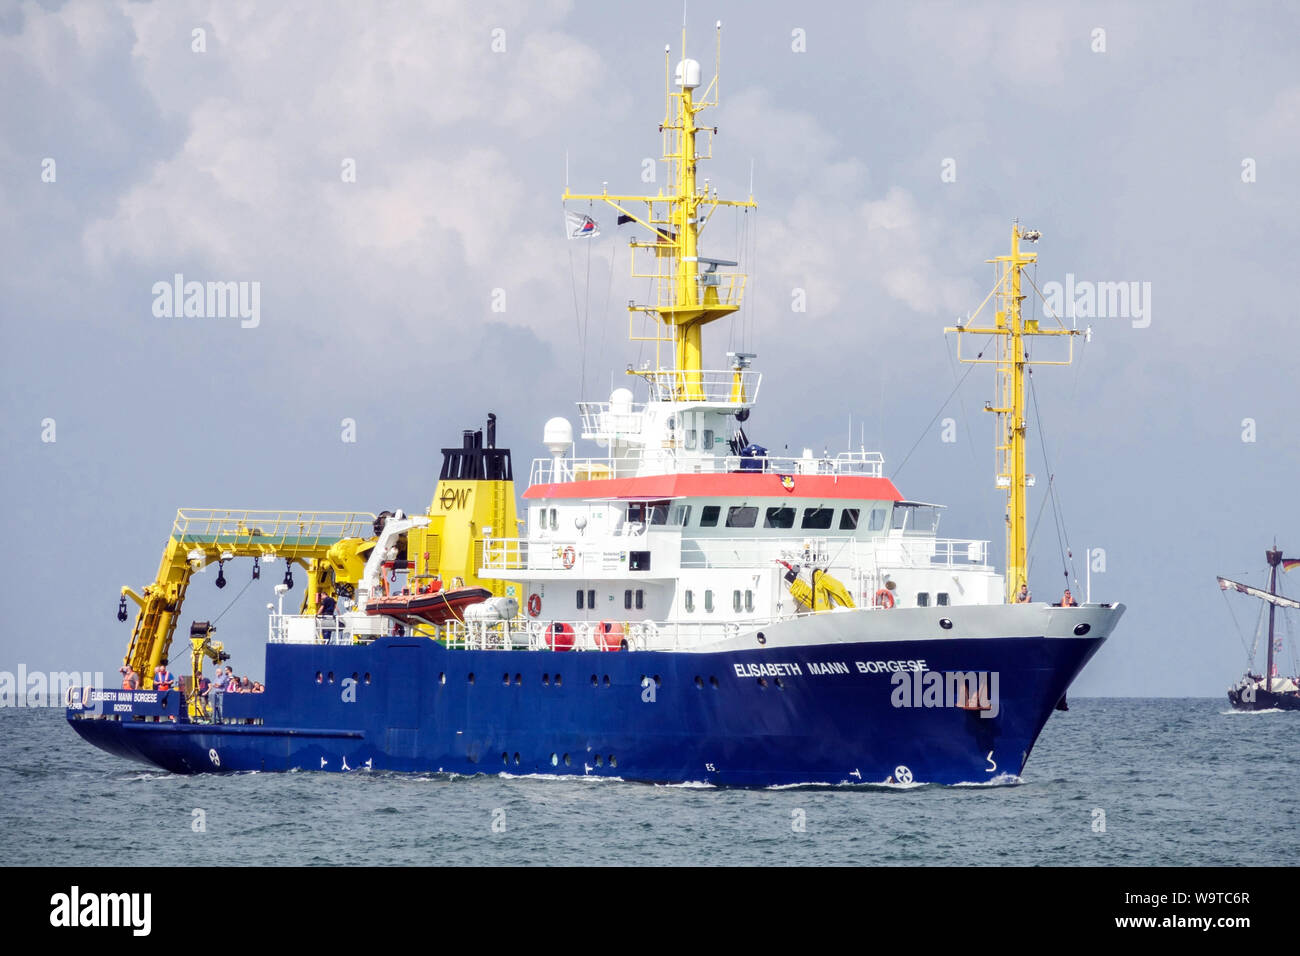 Elisabeth Mann Borgese ship, Multi-purpose research vessel in Baltic Sea Stock Photo